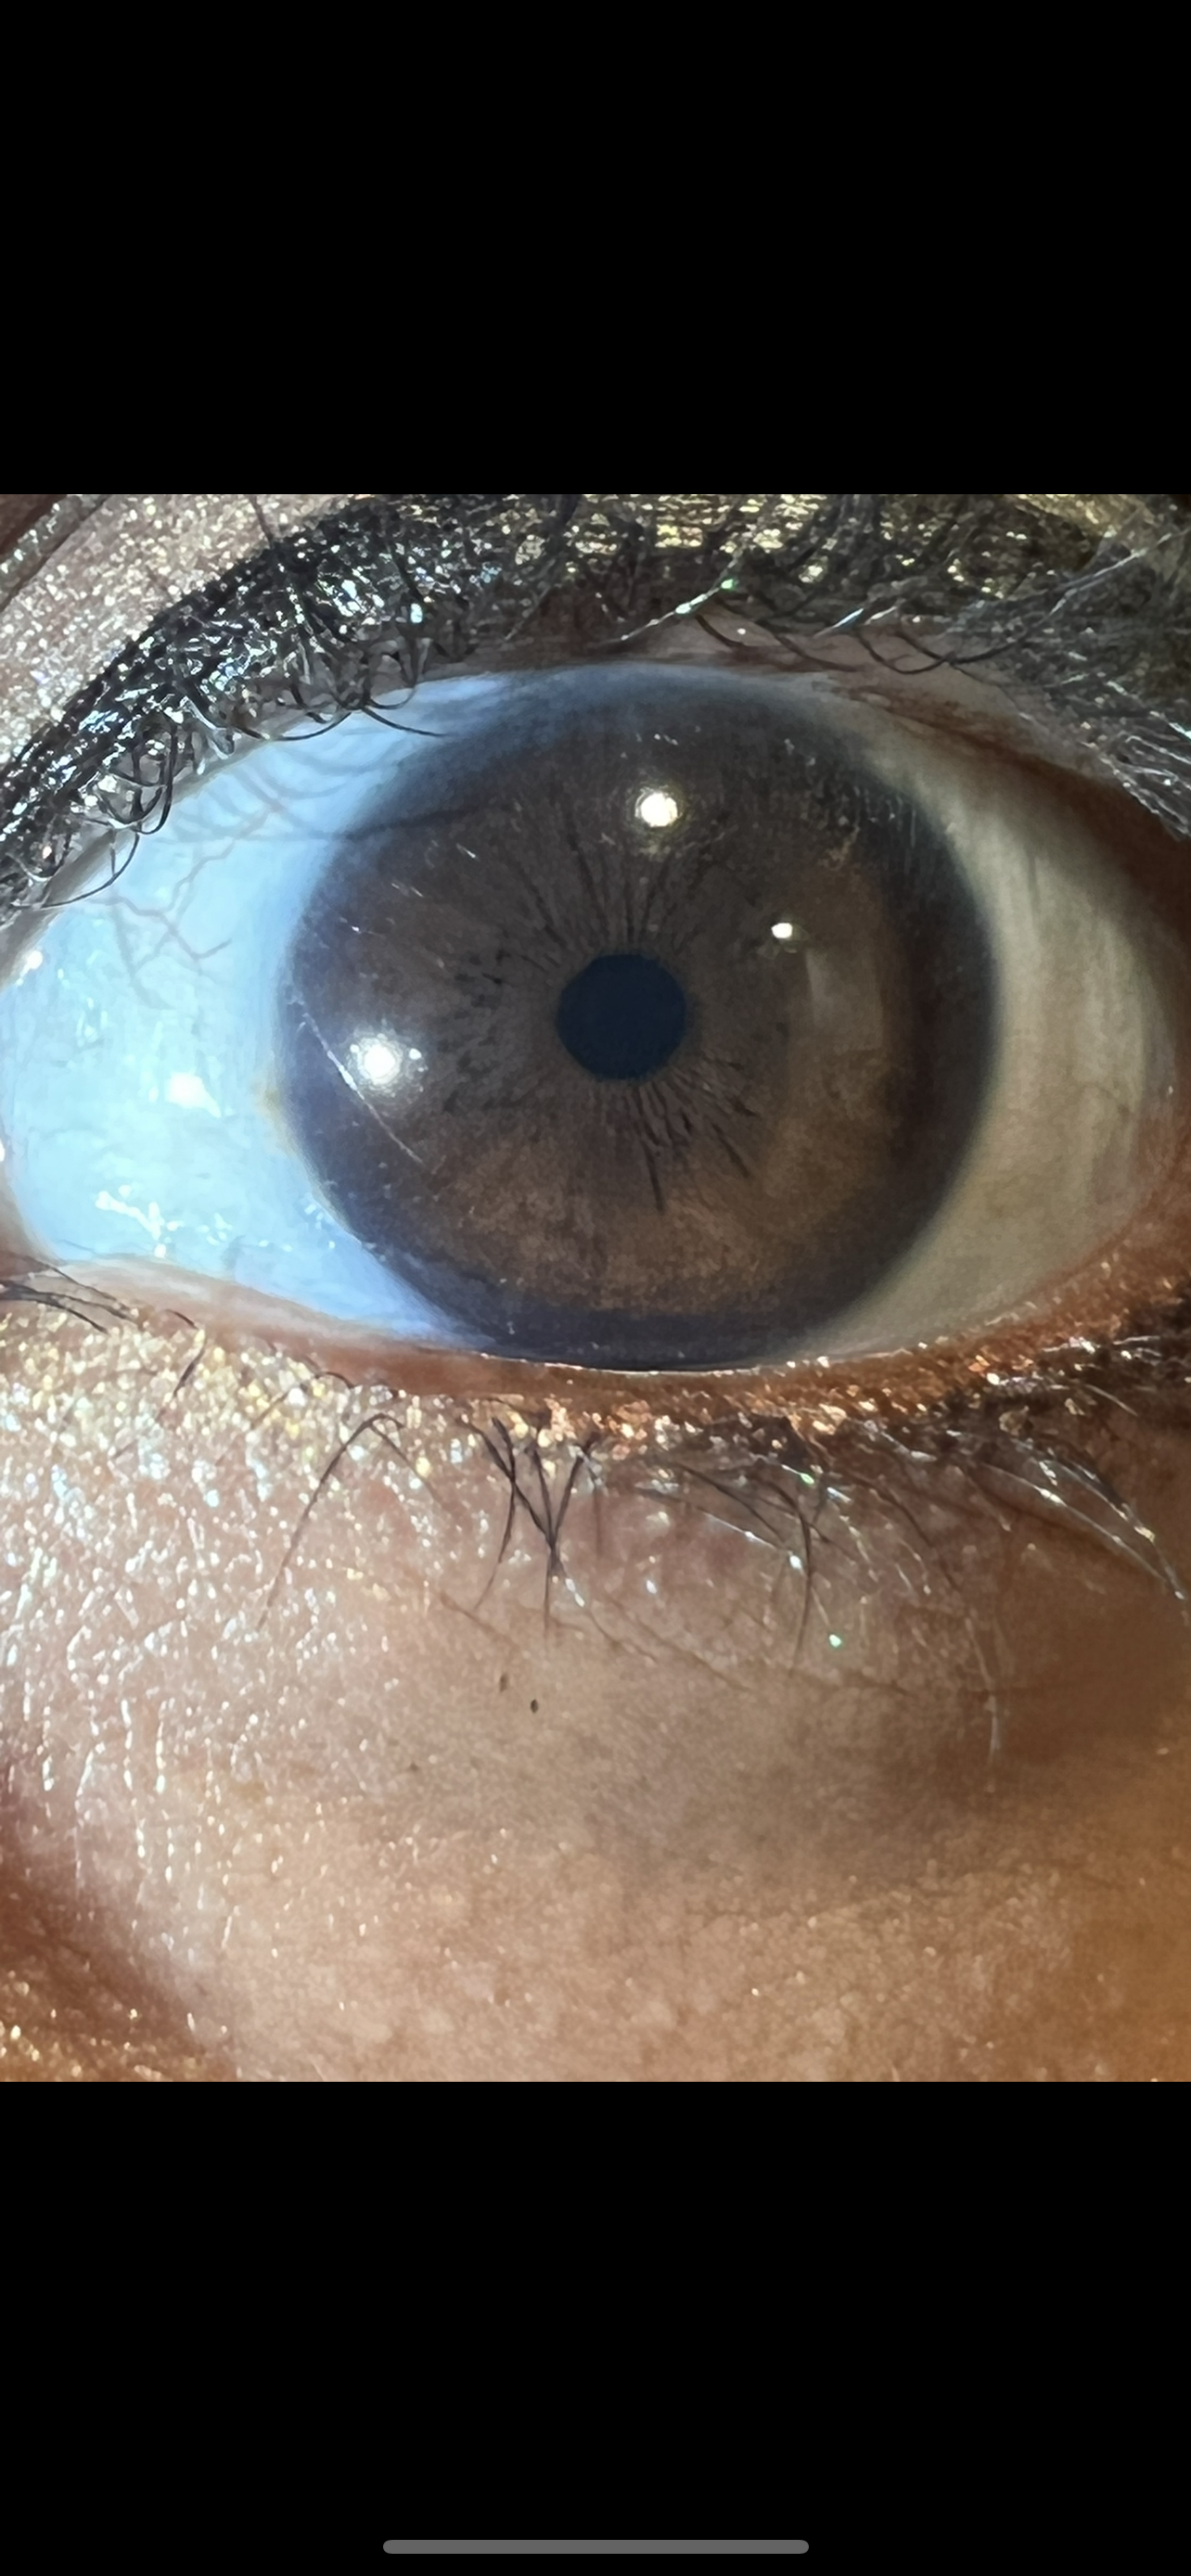 Iridology & Initial Consult: Eye Analysis for Whole Body Insight